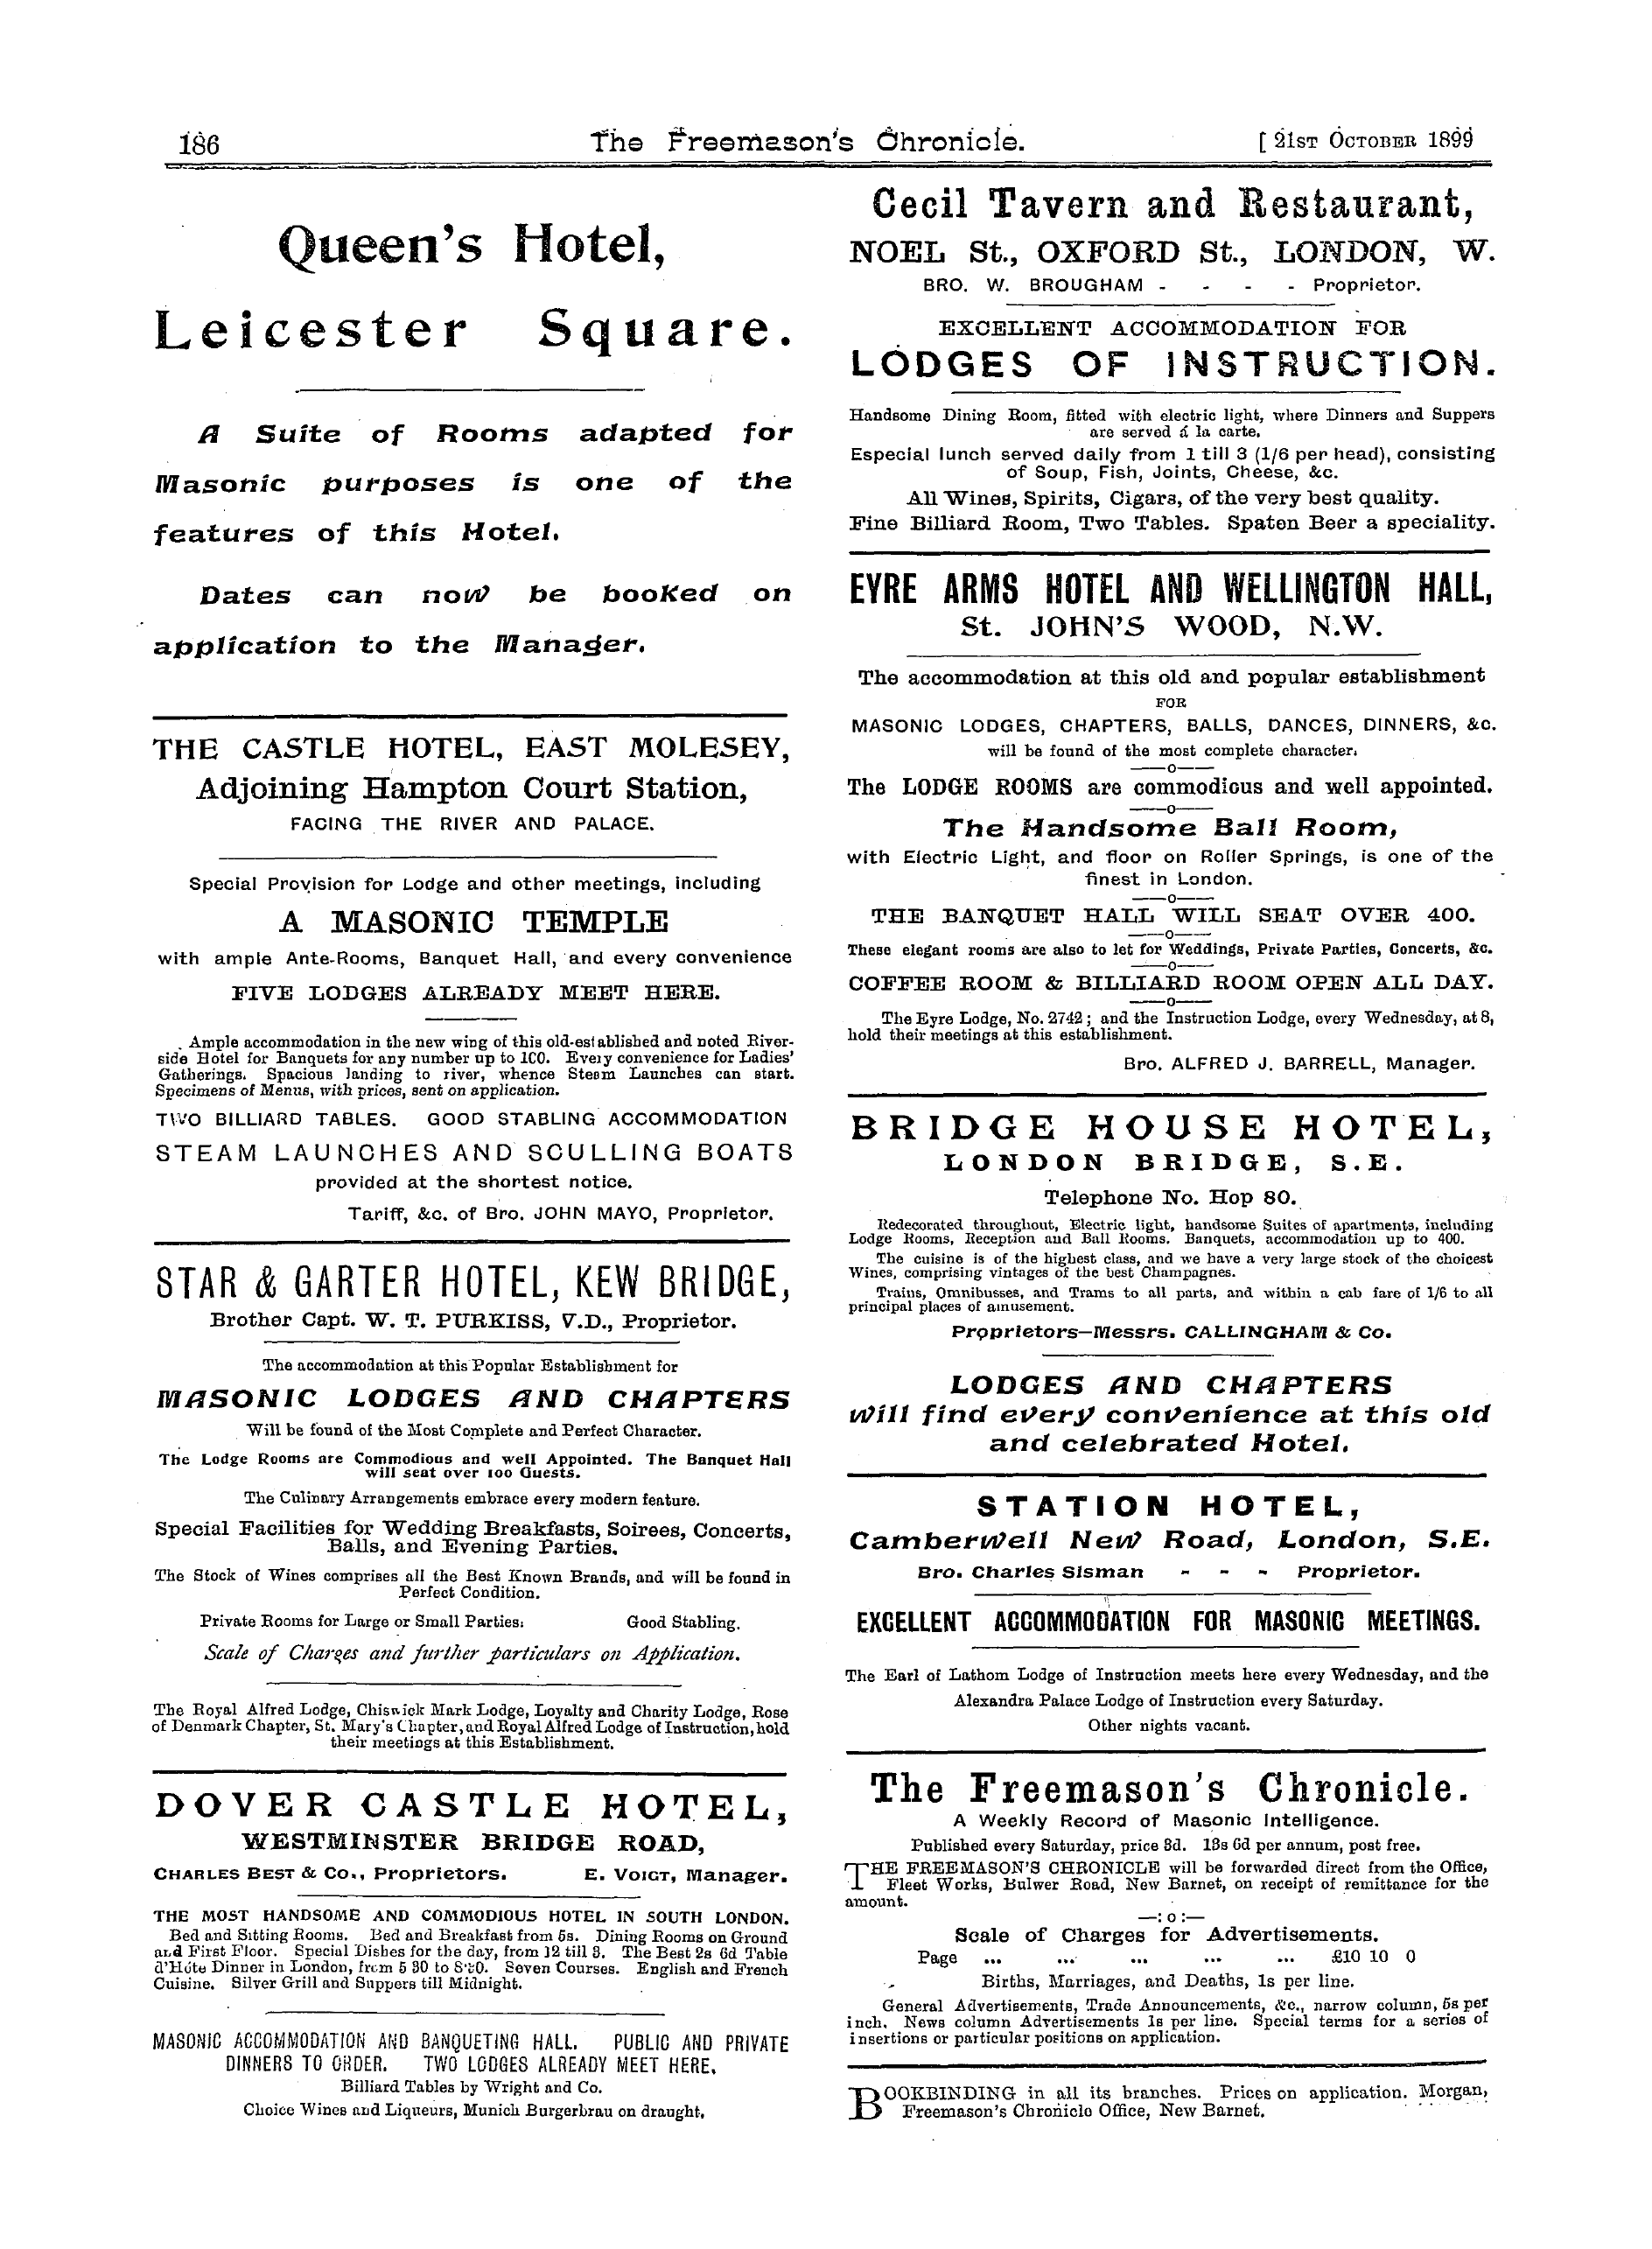 The Freemason's Chronicle: 1899-10-21: 6